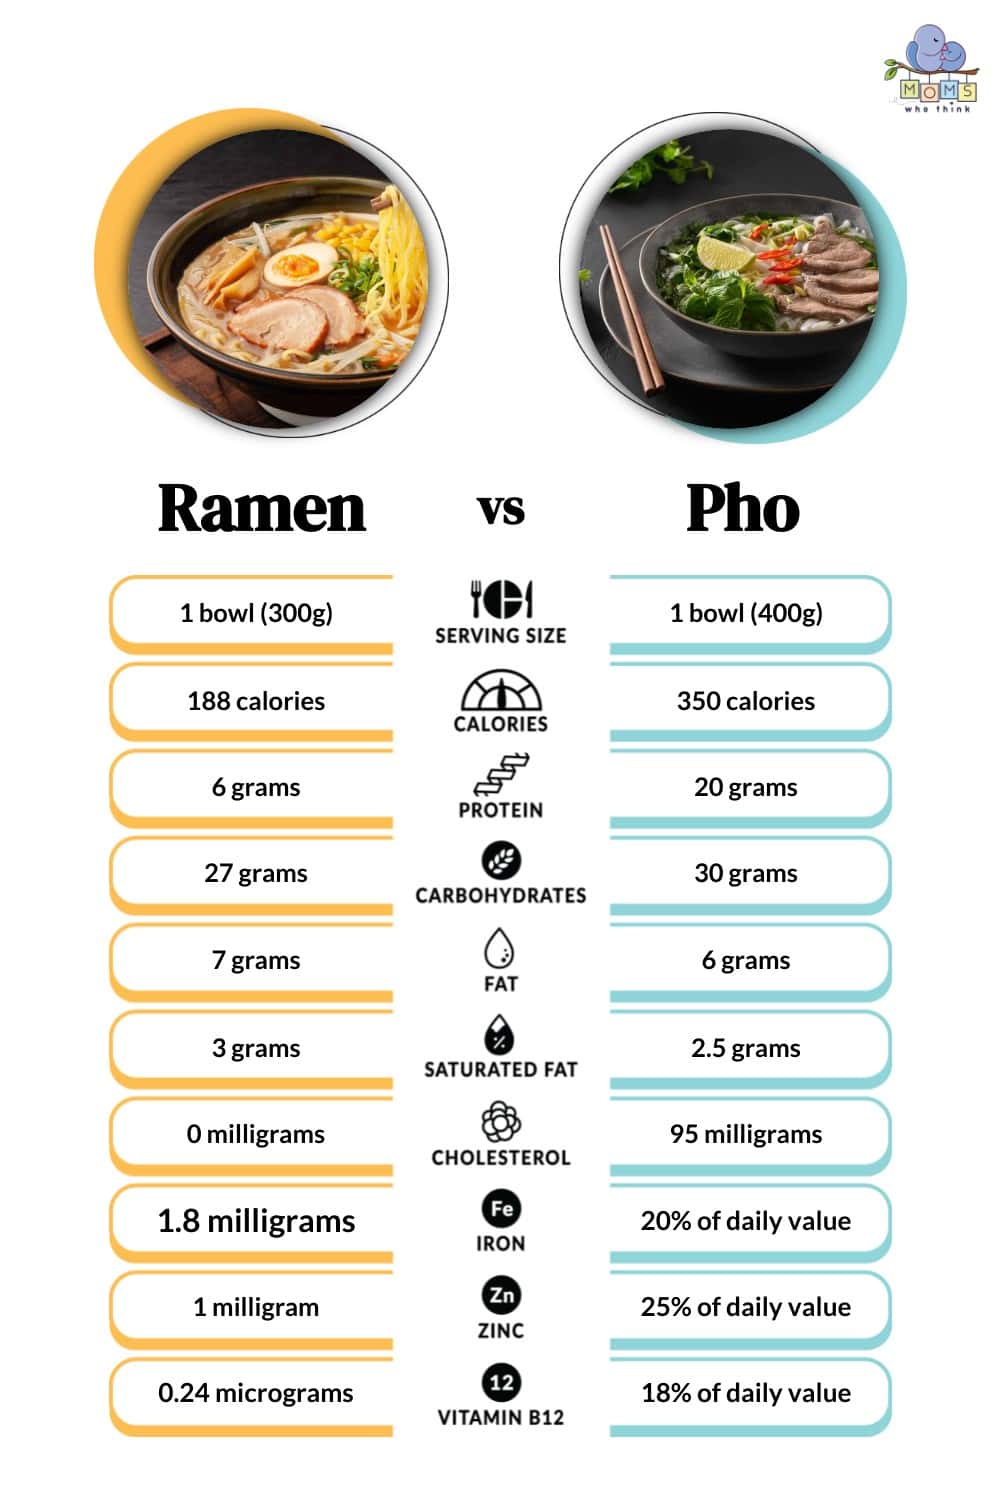 Ramen vs Pho Nutritional Facts